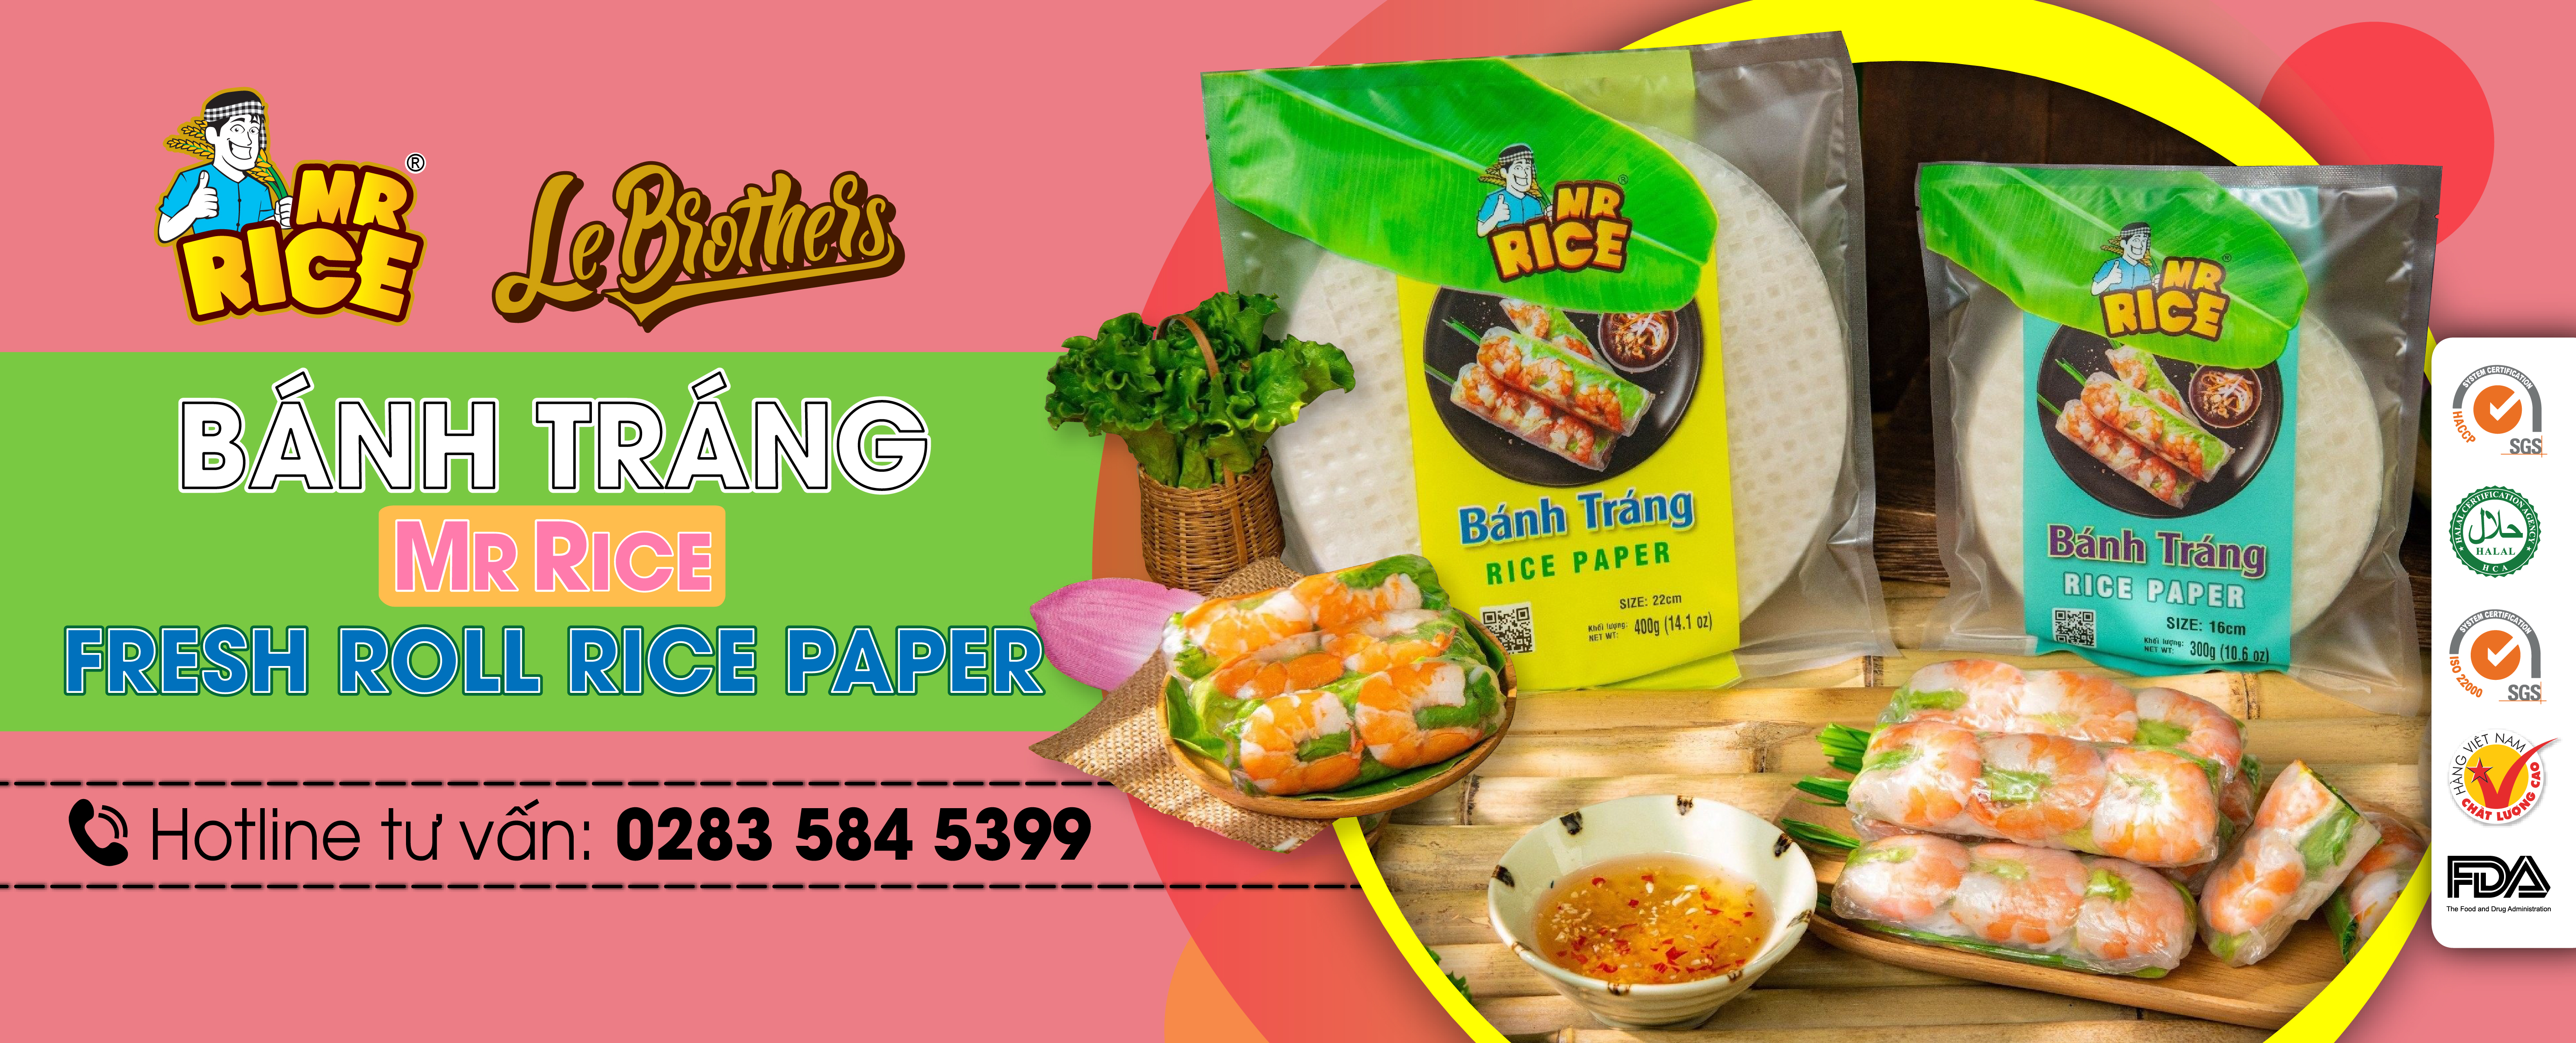 fresh roll rice paper